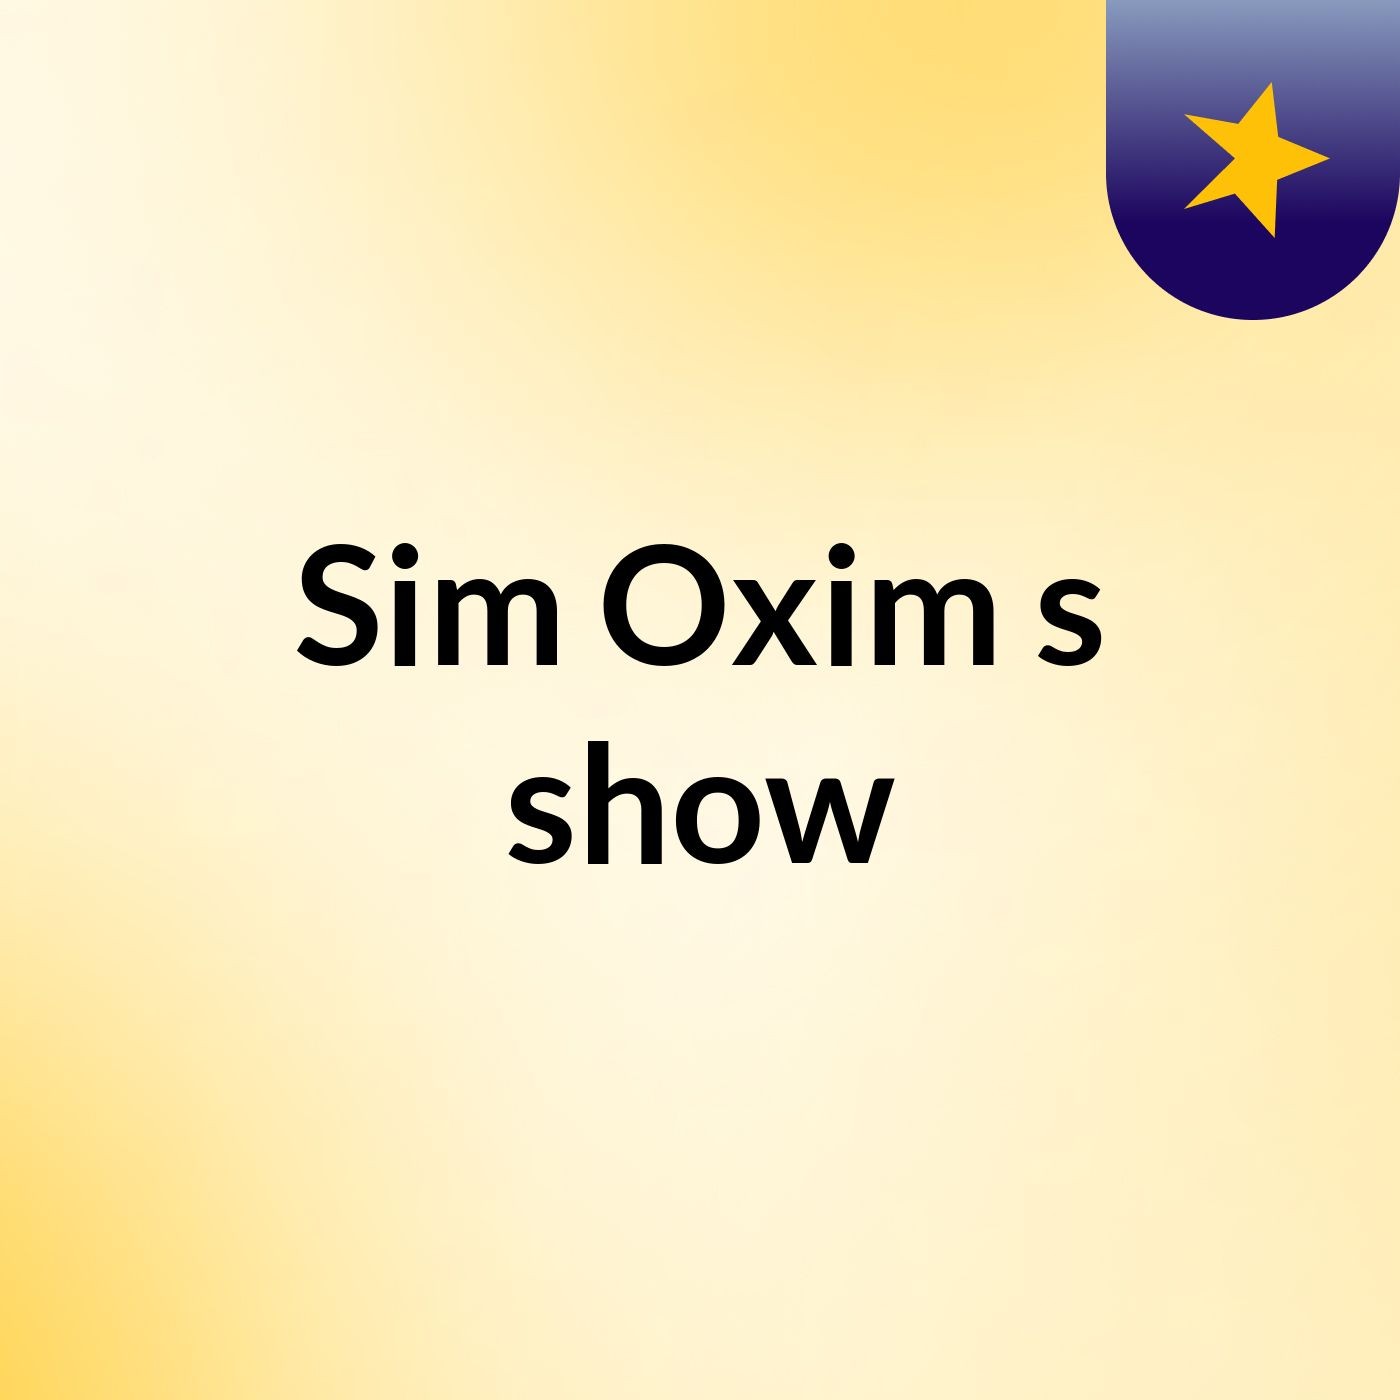 Sim Oxim's show